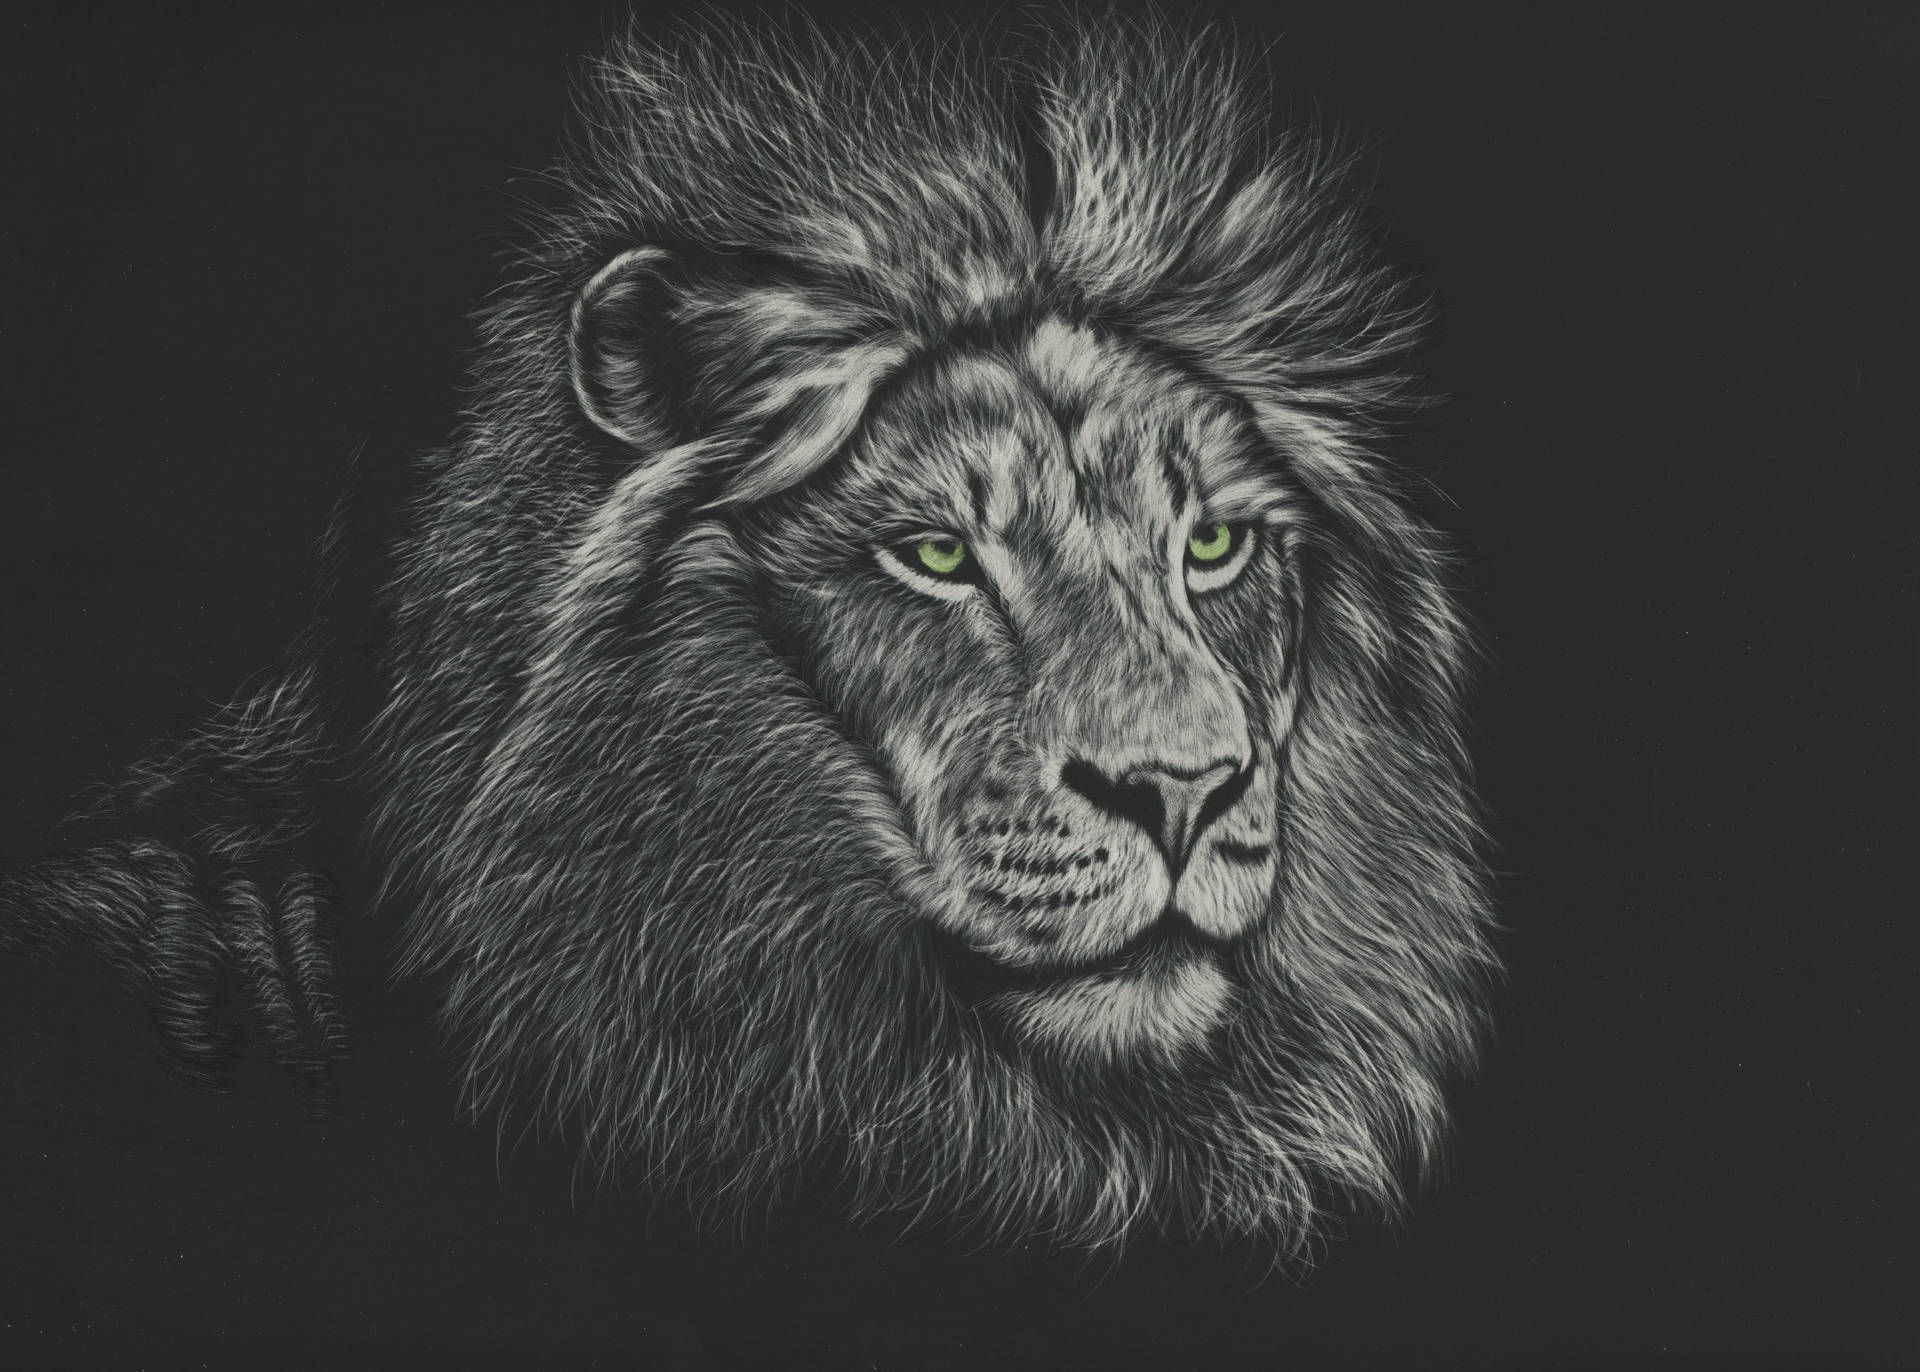 Black And White Predator Lion Wallpaper